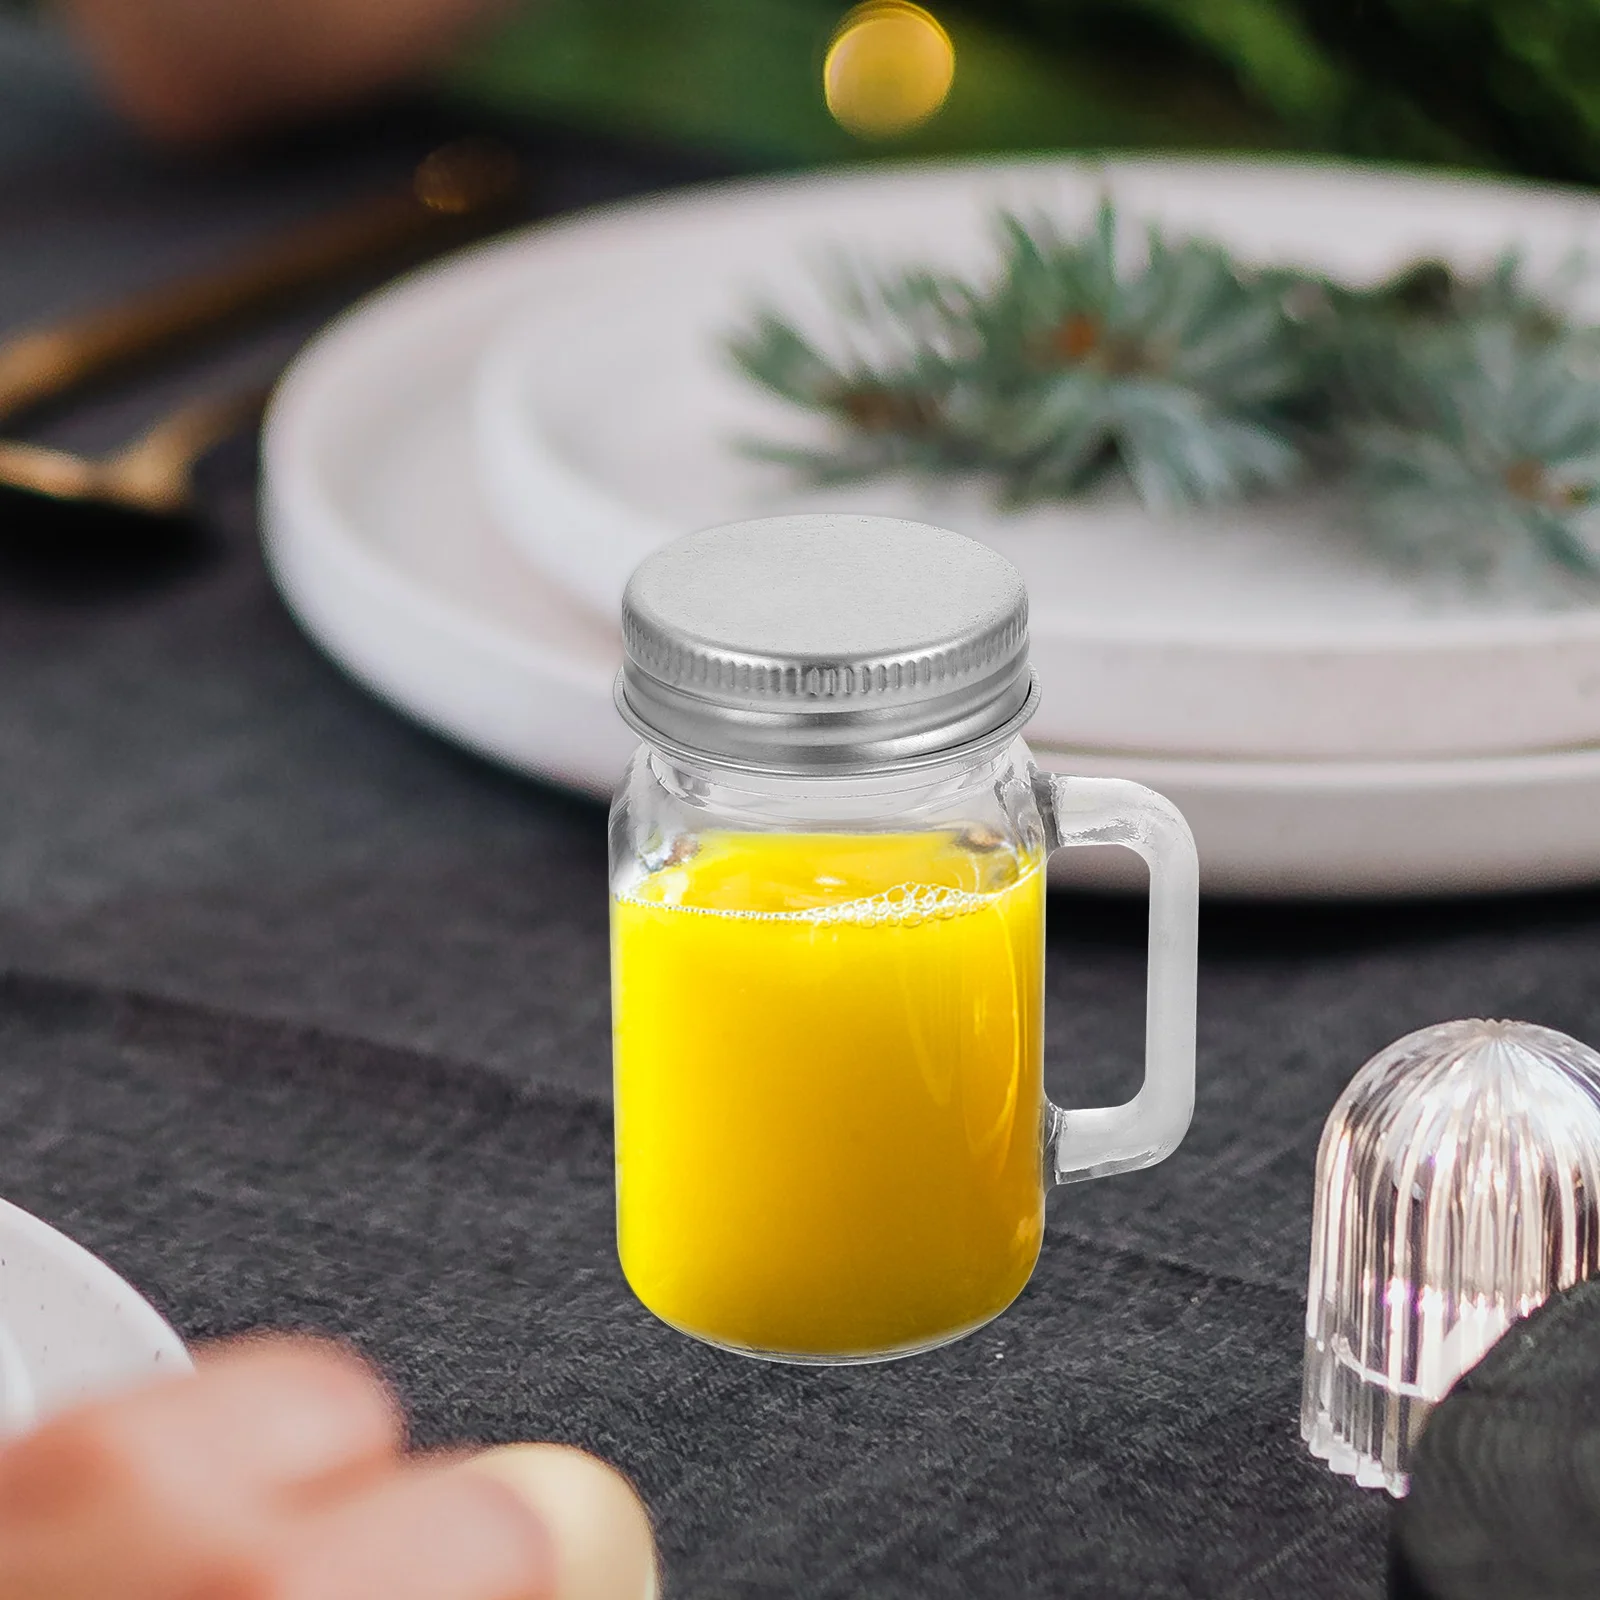 

16 Pcs Jars With Handle Household Jam Kitchen Honey Holder Lidded Glass Fruits Bottles Mason Sealing